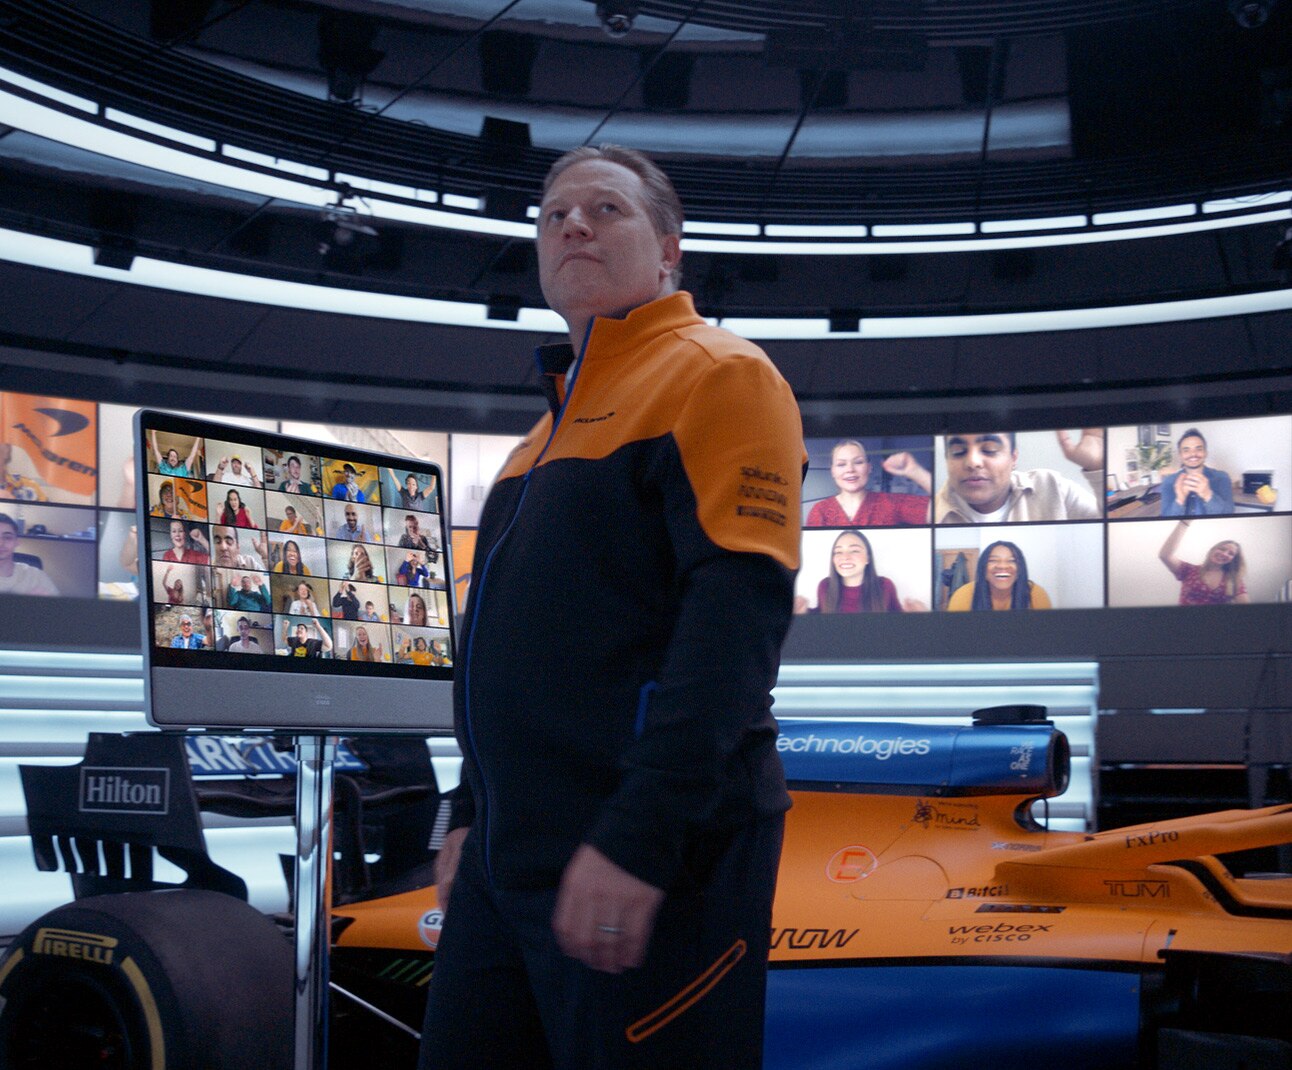 McLaren F1 Racing team member uses Cisco Desk Pro for Webex video conference in grid view inside McLaren HQ.